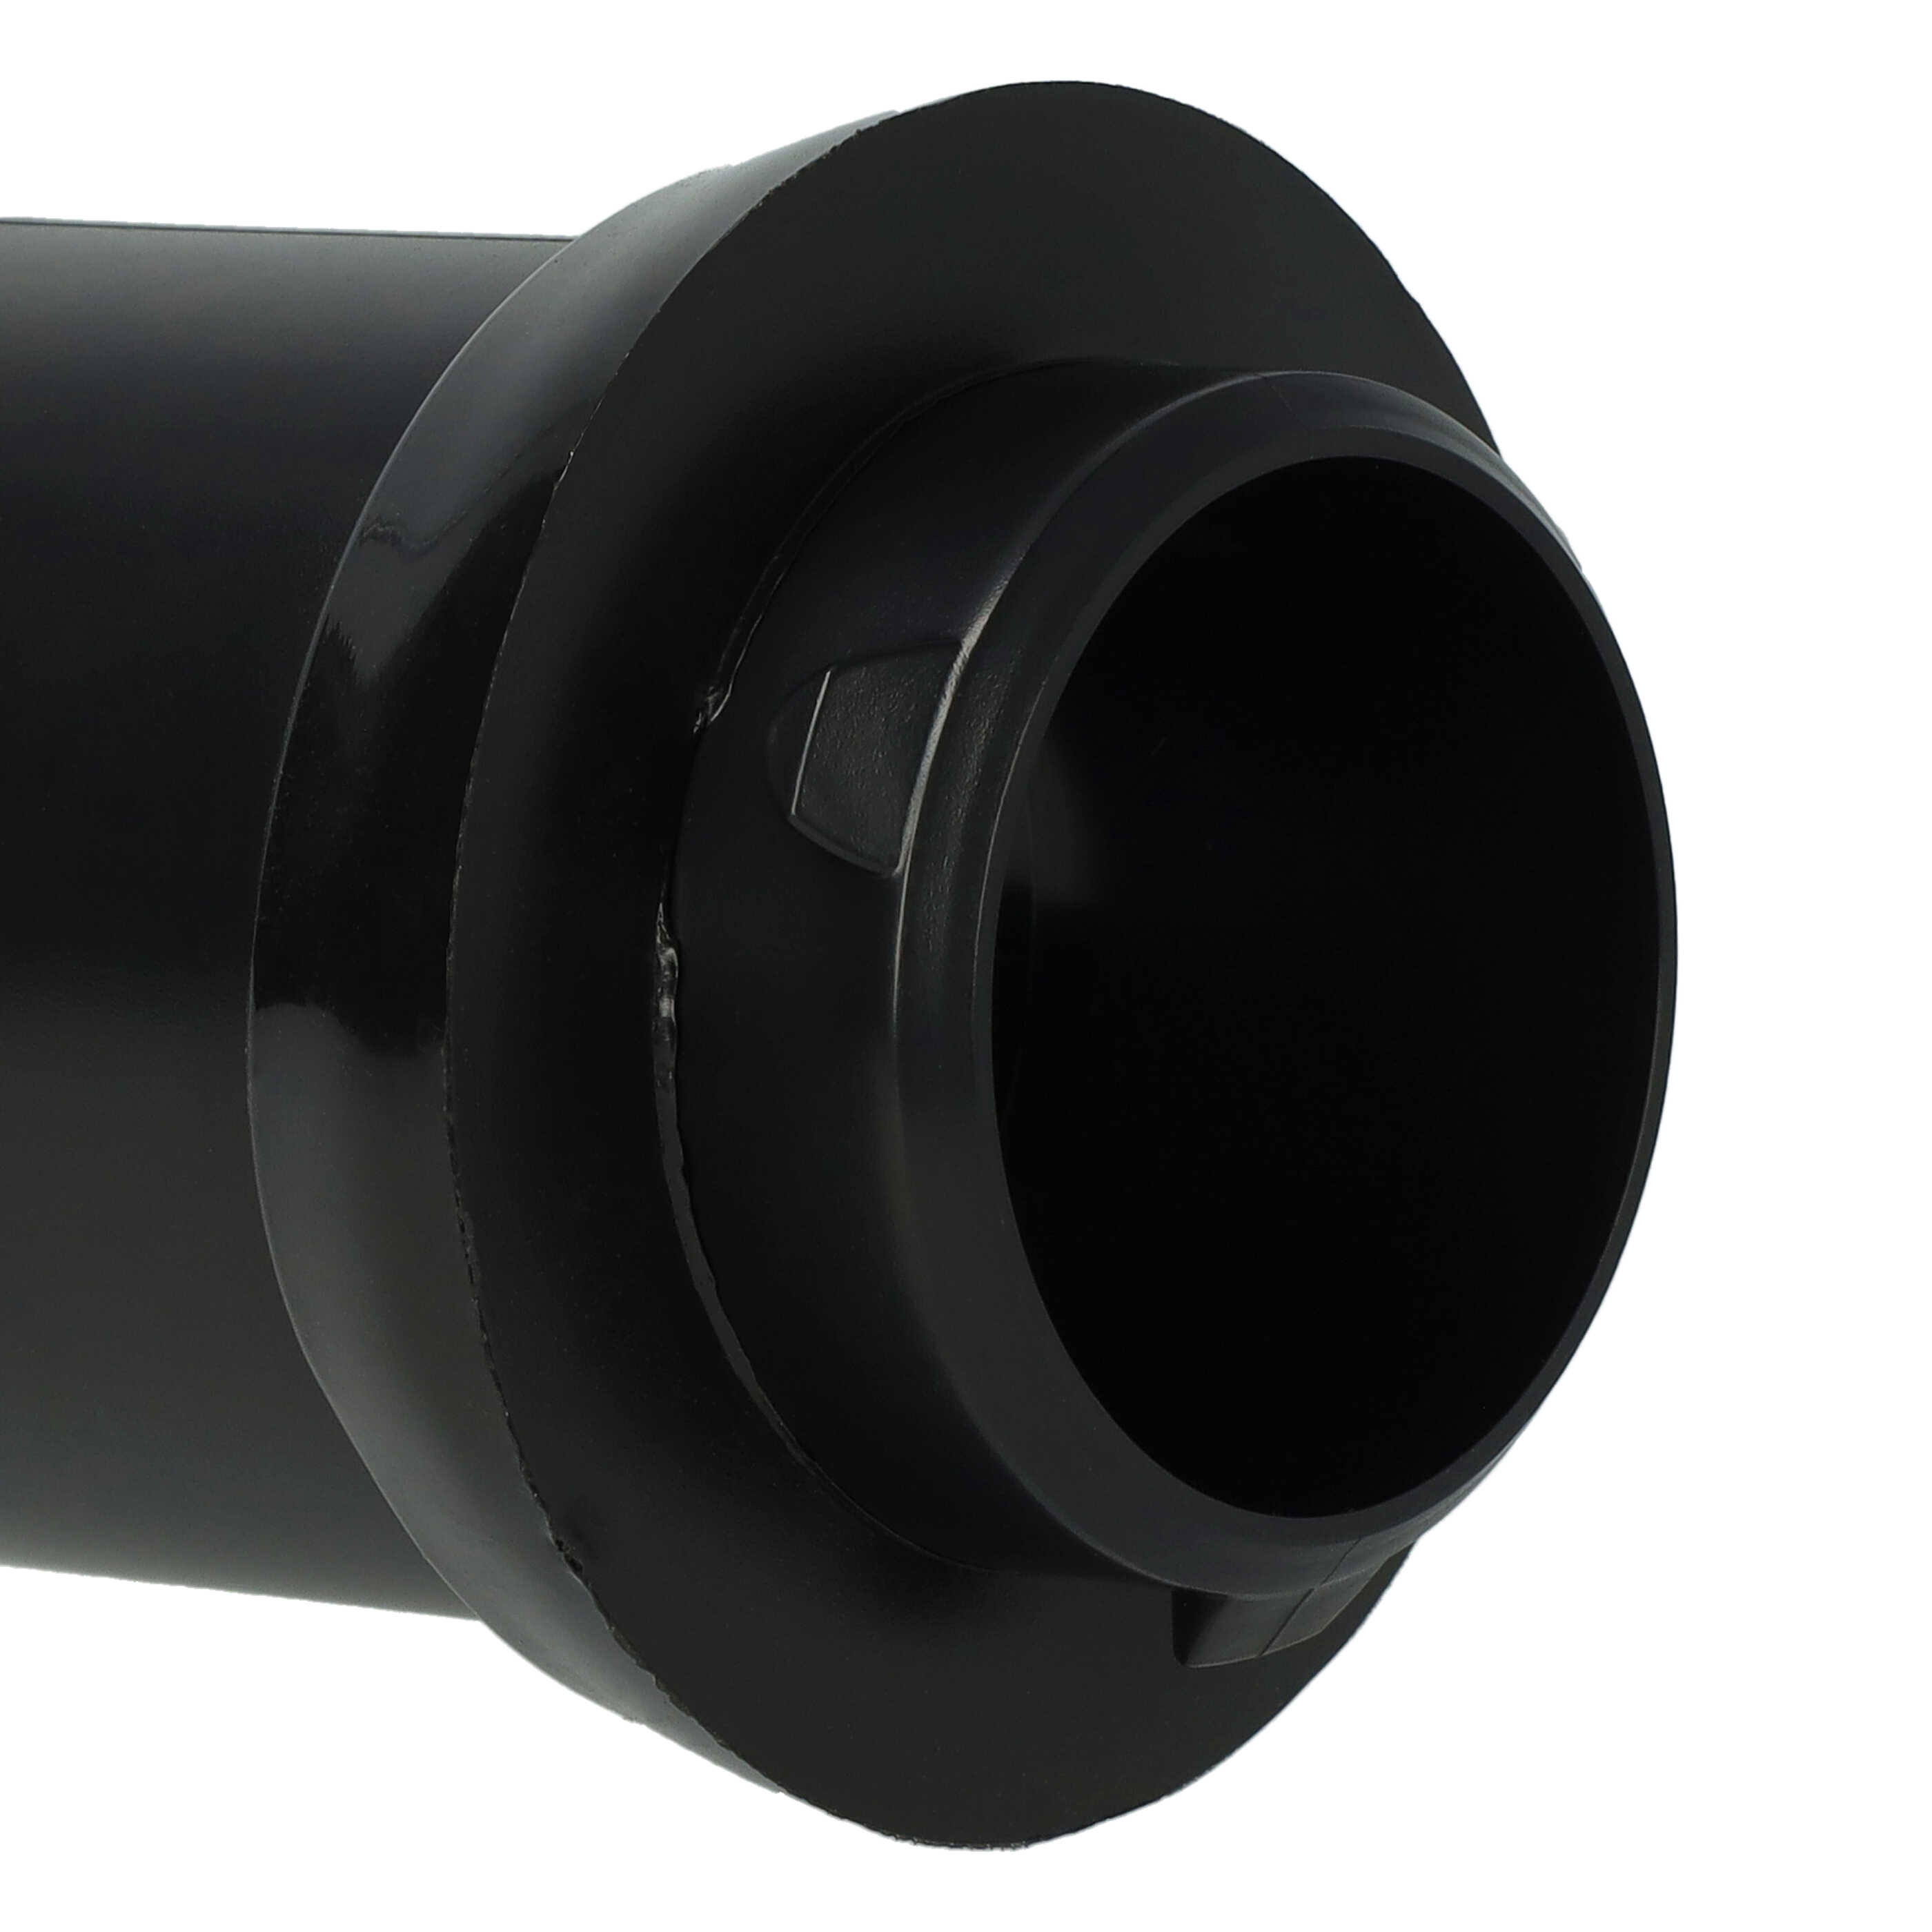 Adattatore per tubo flessibile per D340 Lux aspiratori ecc - sistema a clic